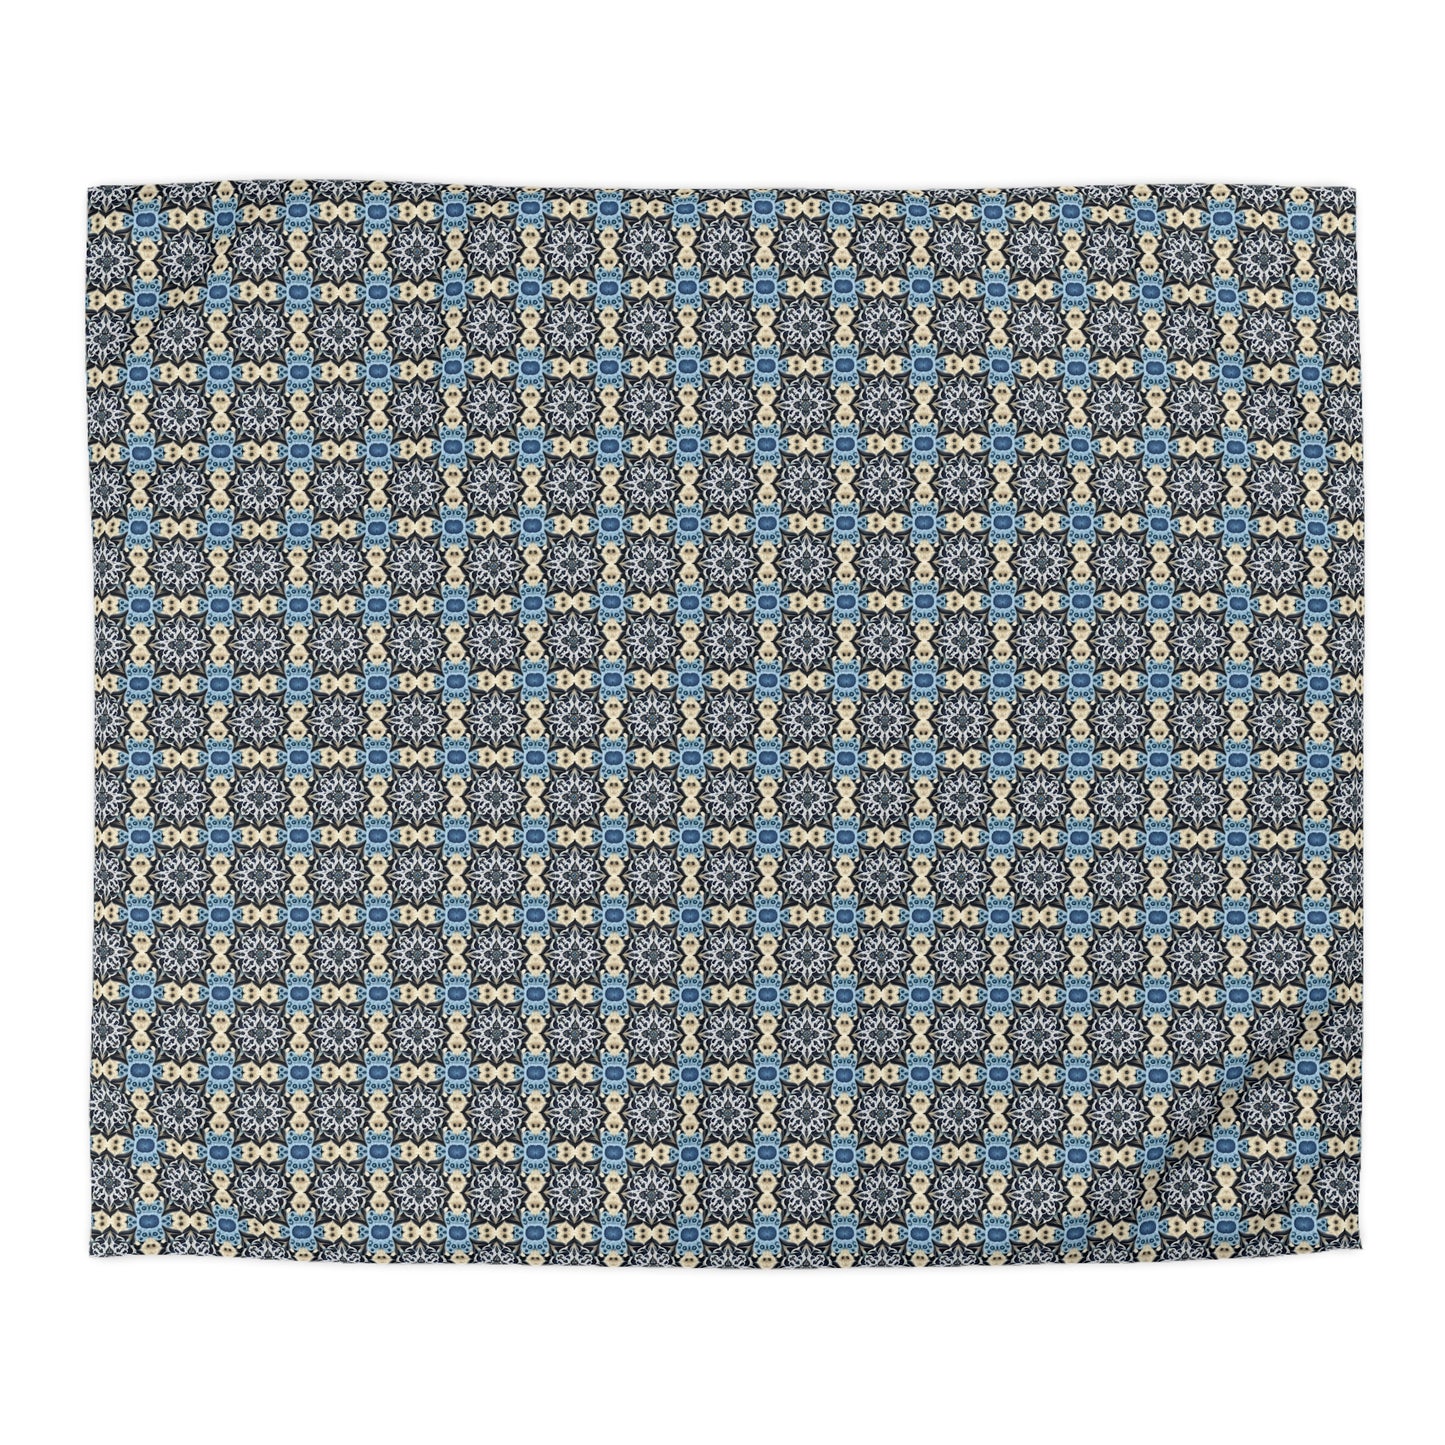 Morrocan Blue Microfiber Duvet Cover